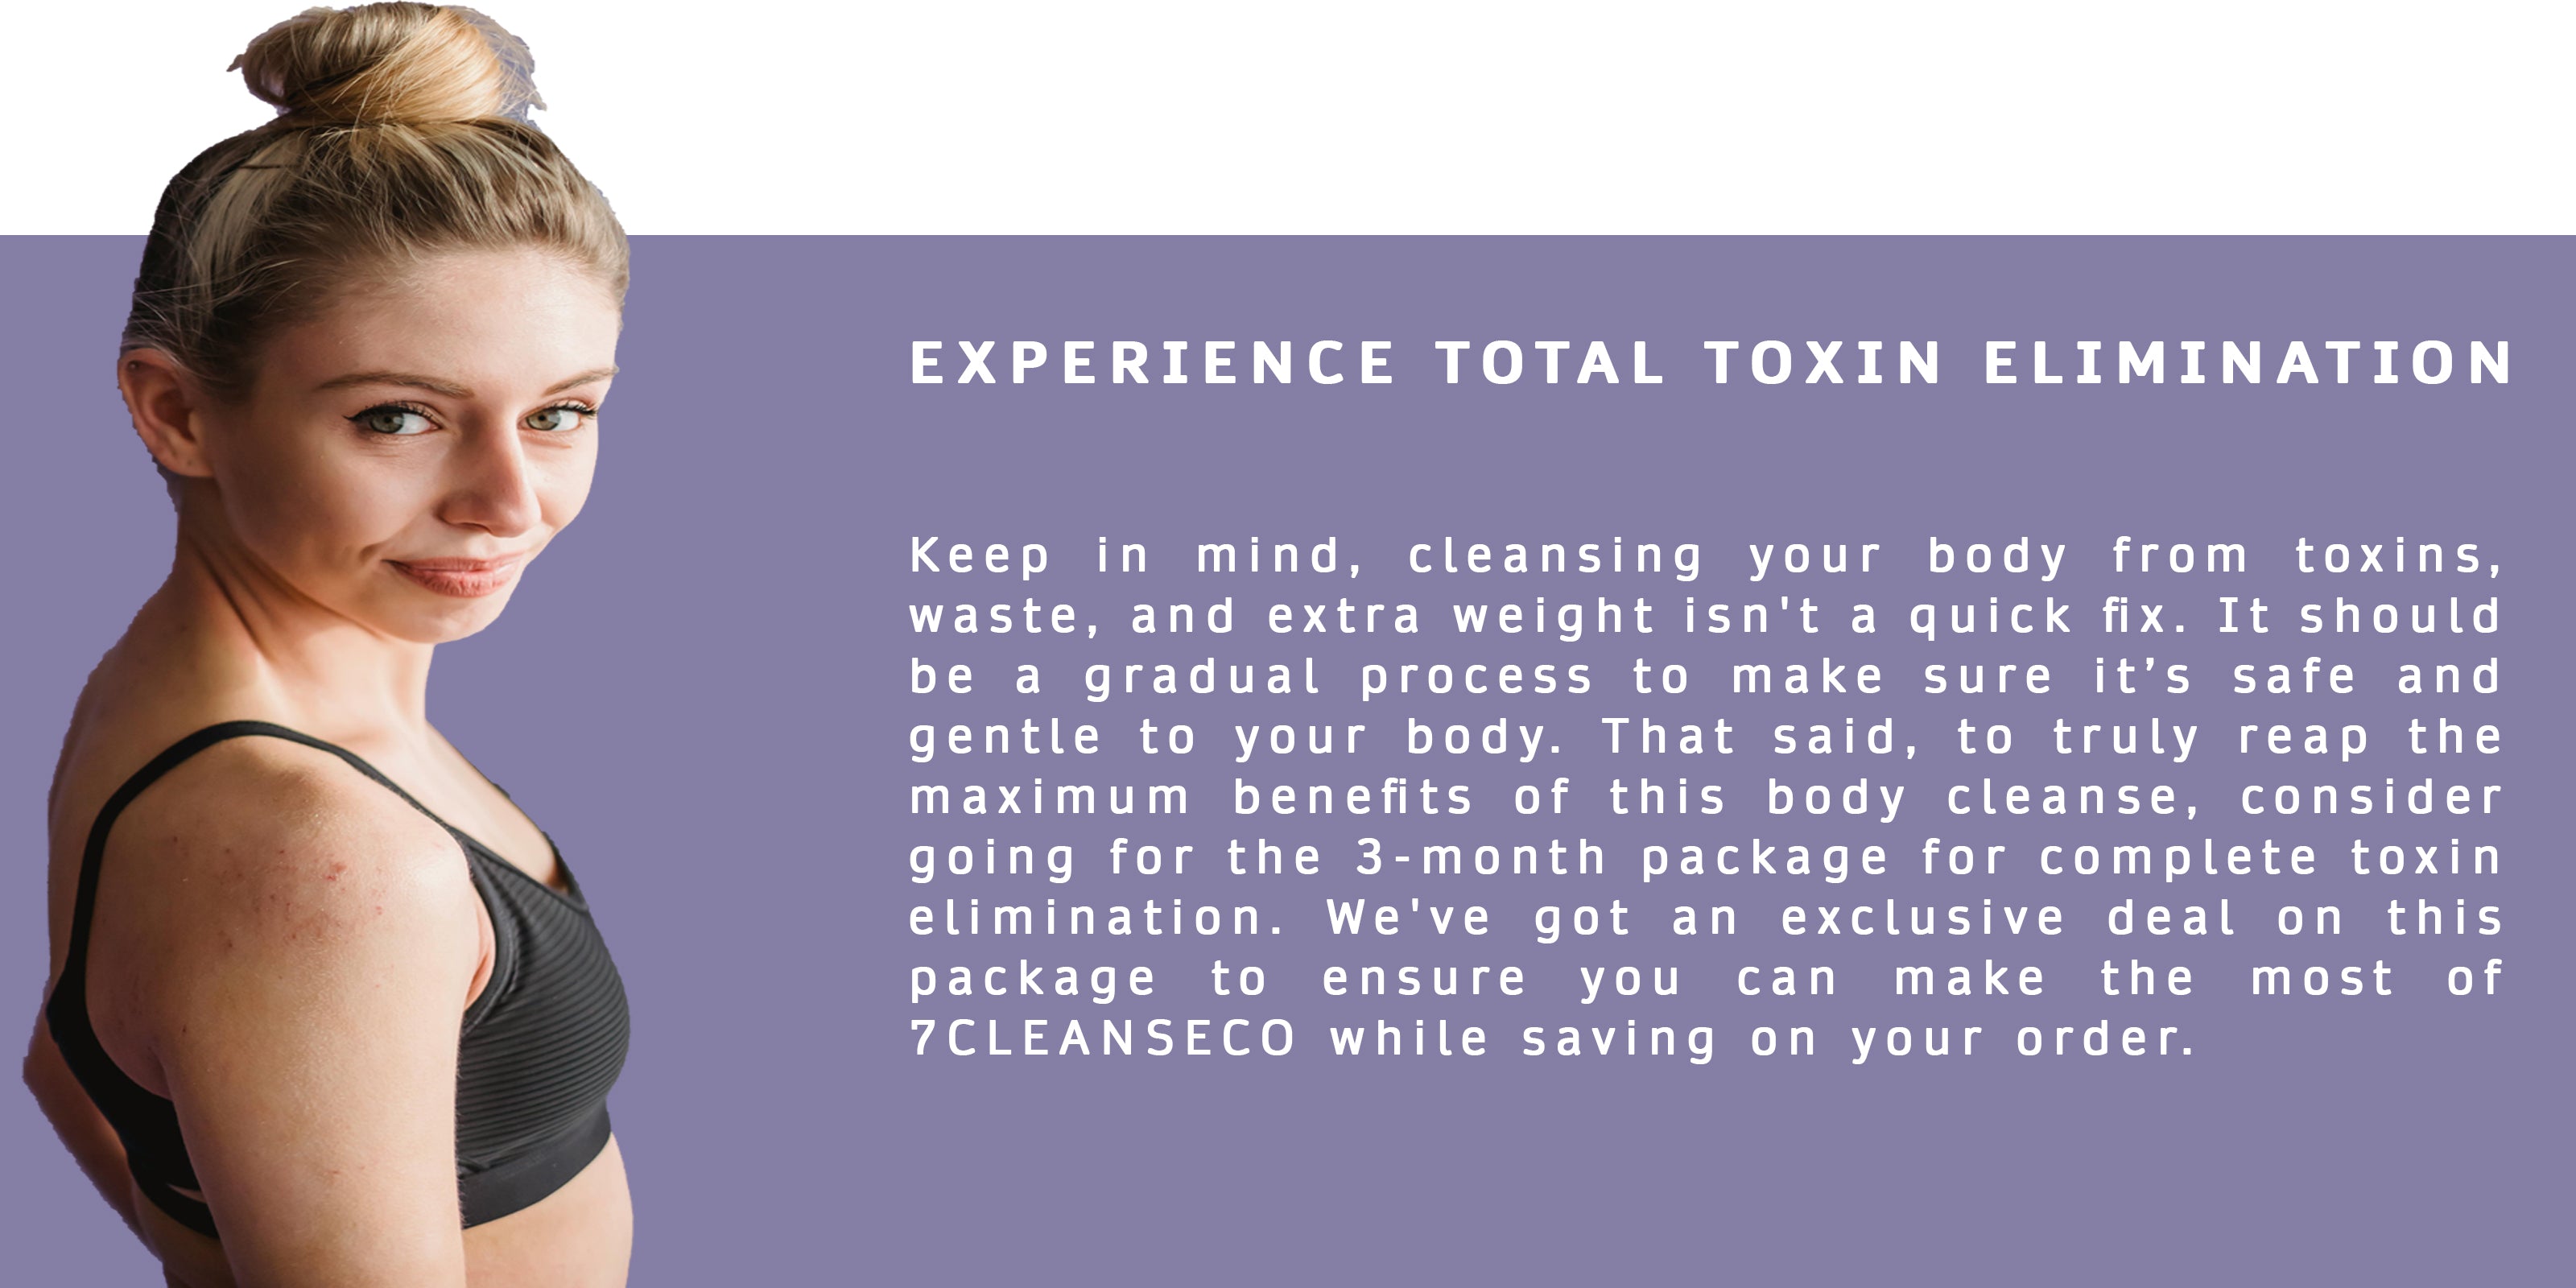 Experience total body detoxification